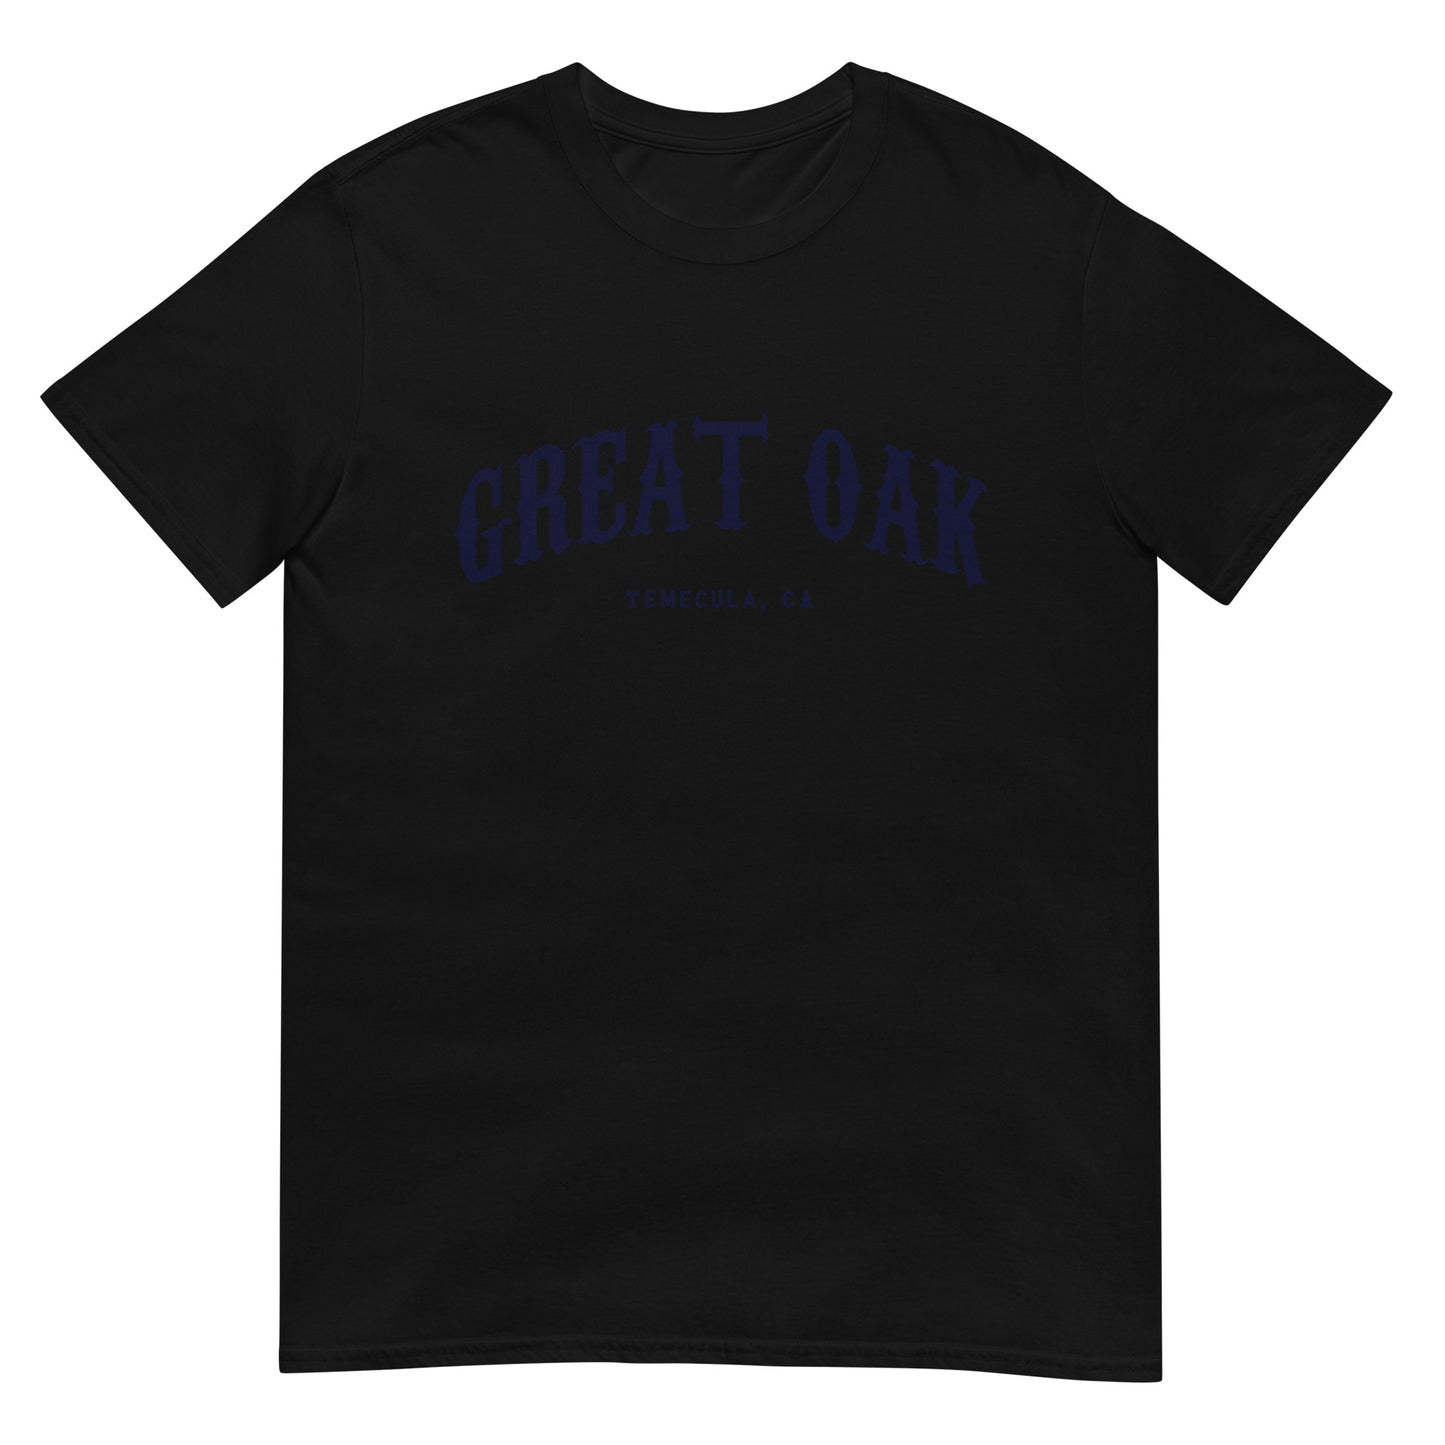 Great Oak Short-Sleeve Unisex T-Shirt